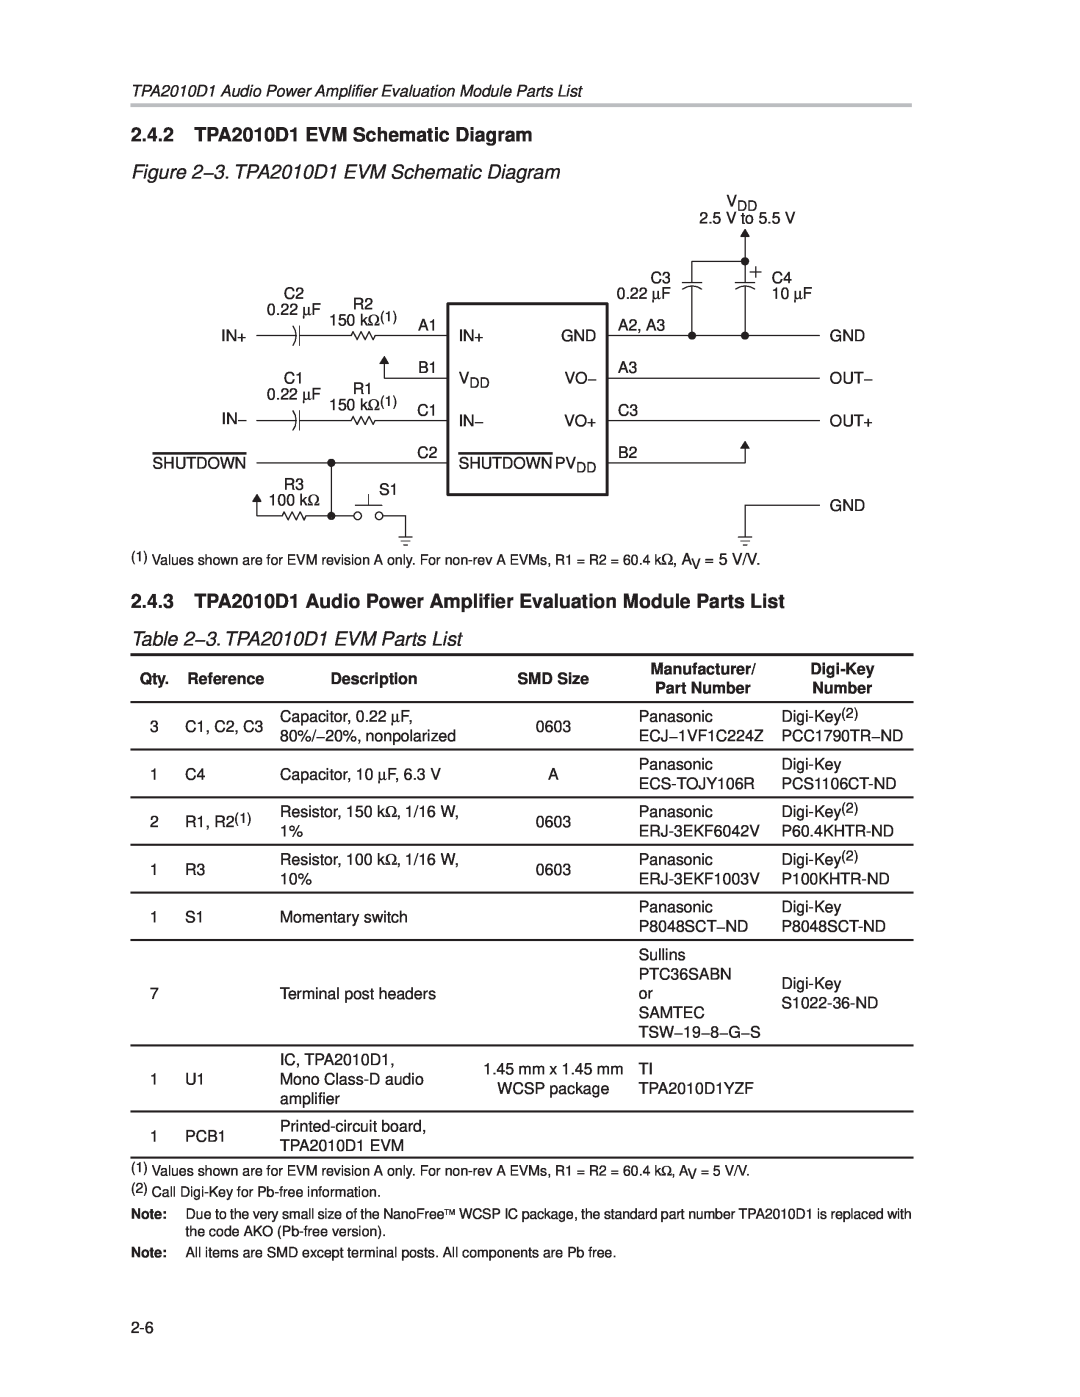 Texas Instruments 2004 manual 2.4.2TPA2010D1 EVM Schematic Diagram, 3. TPA2010D1 EVM Schematic Diagram, 10∝F 